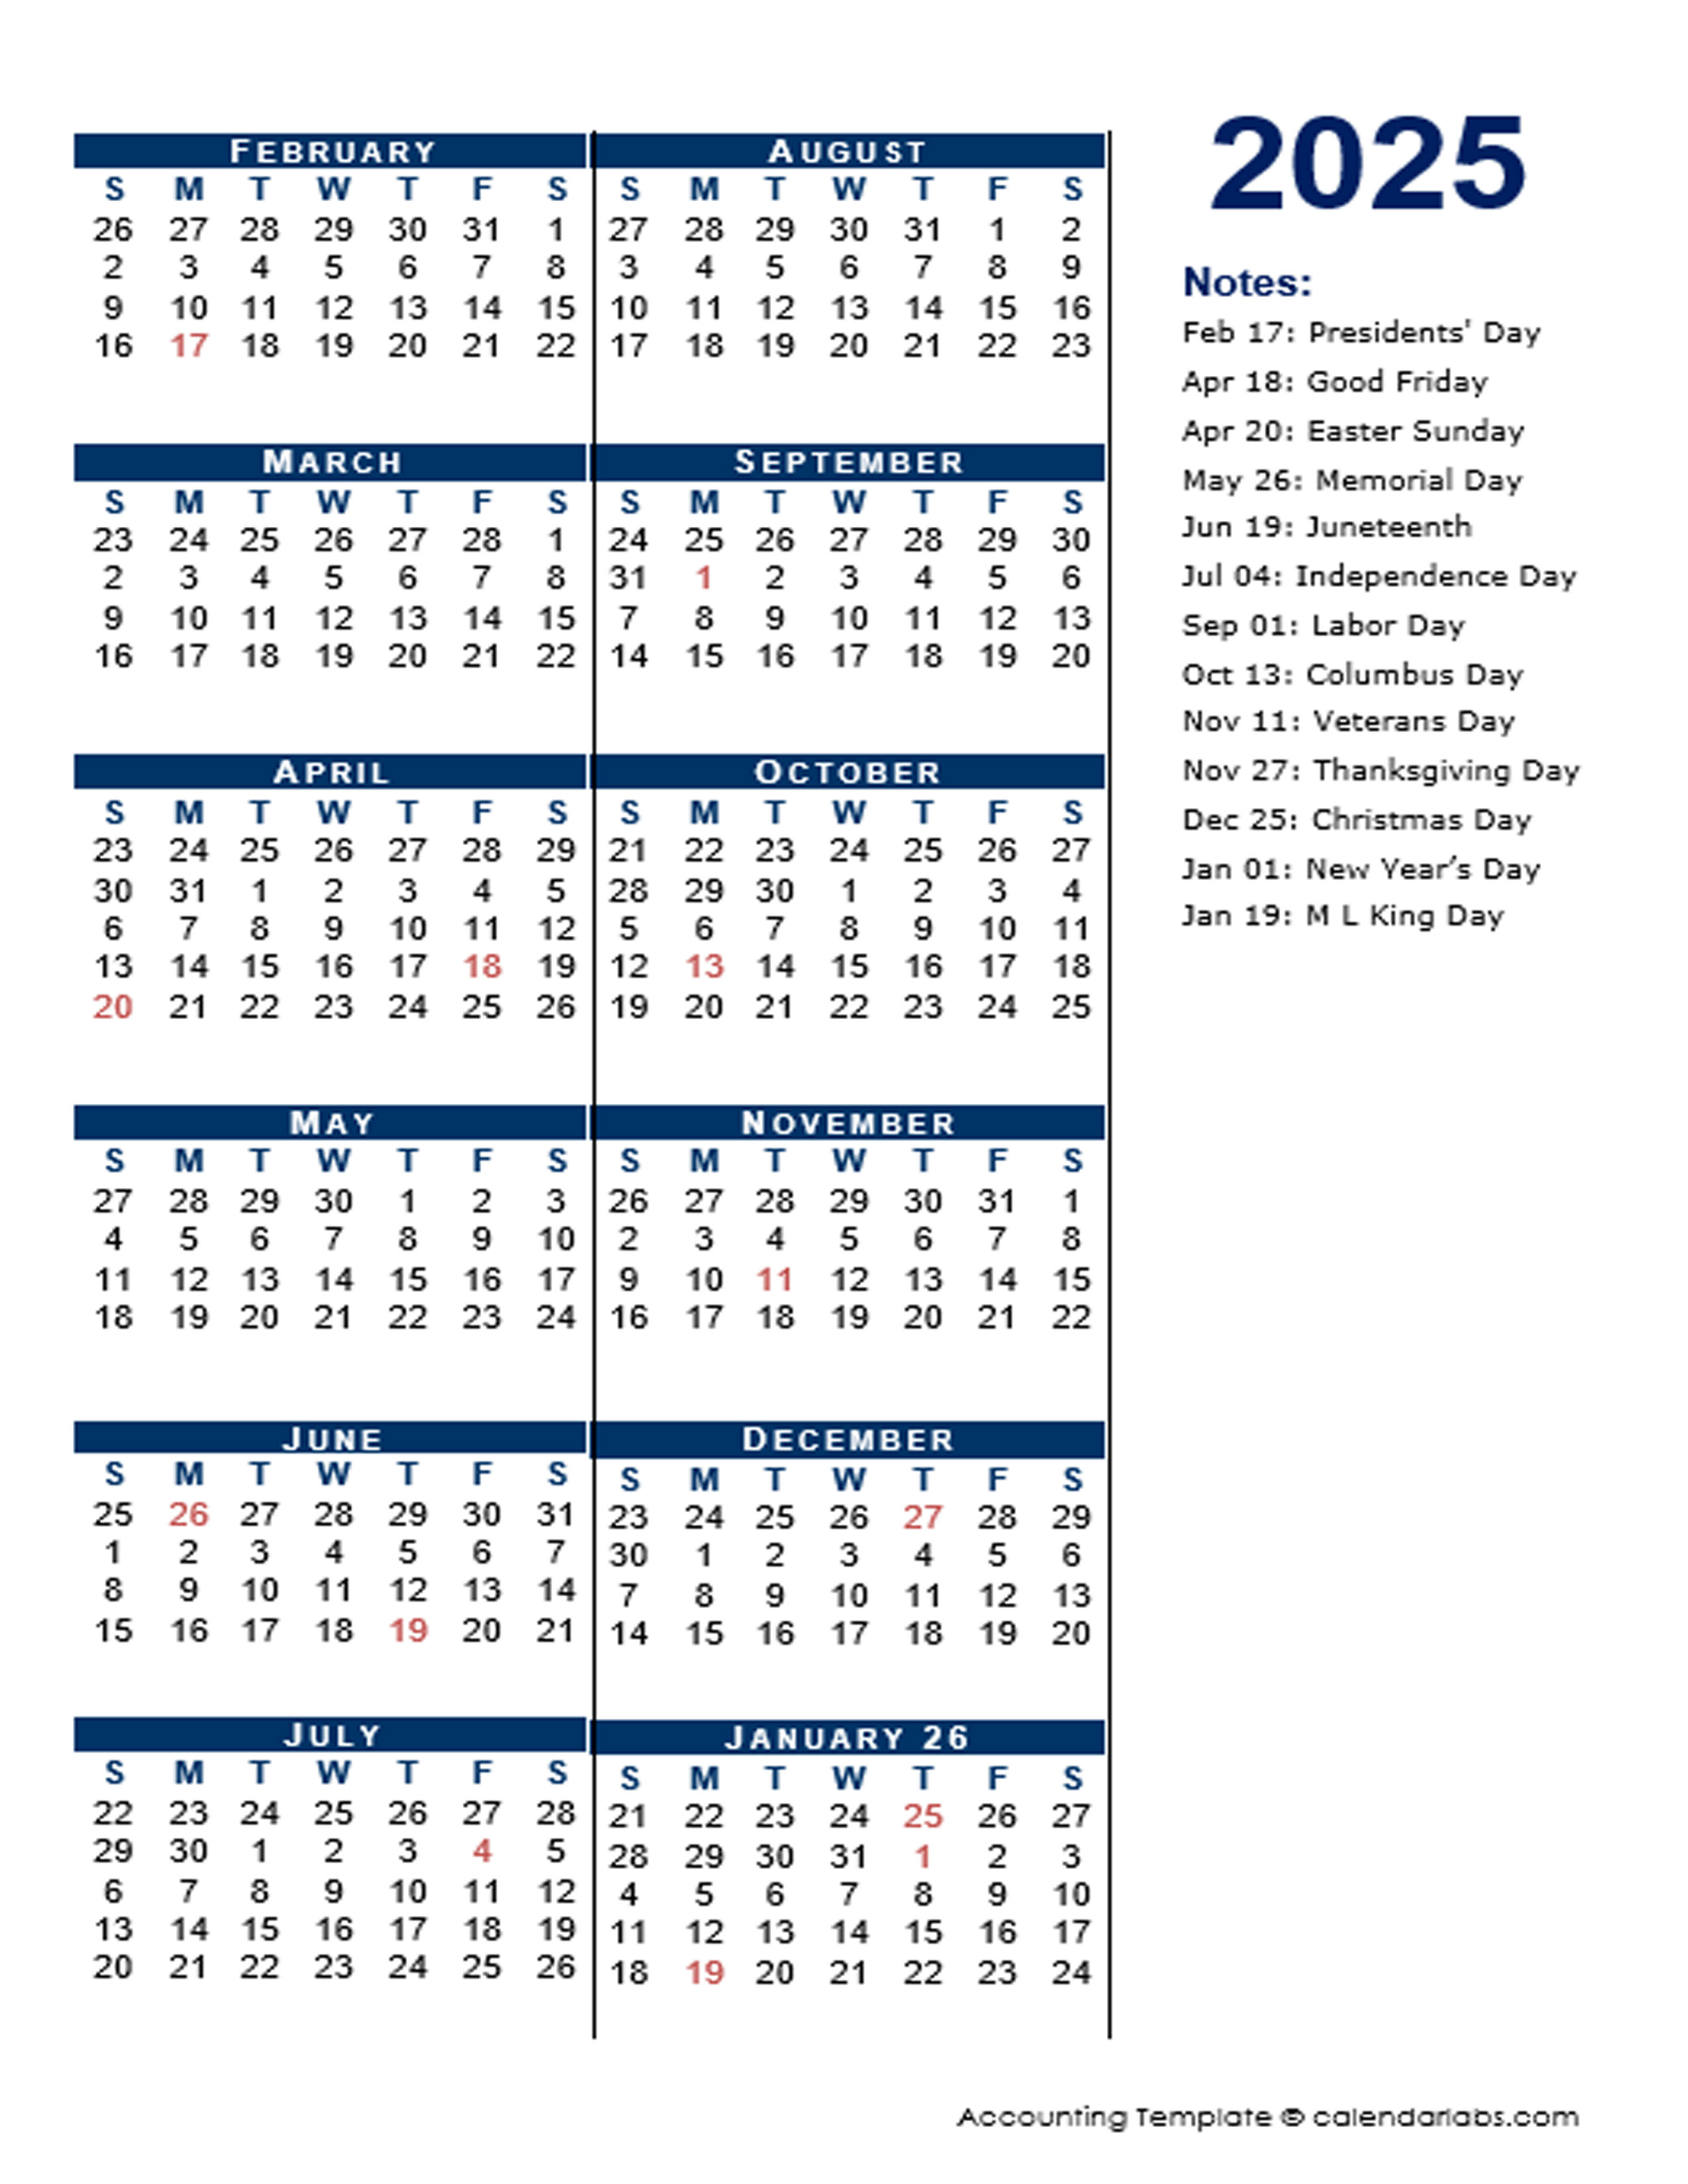 2025 Fiscal Period Calendar 4-4-5 - Free Printable Templates